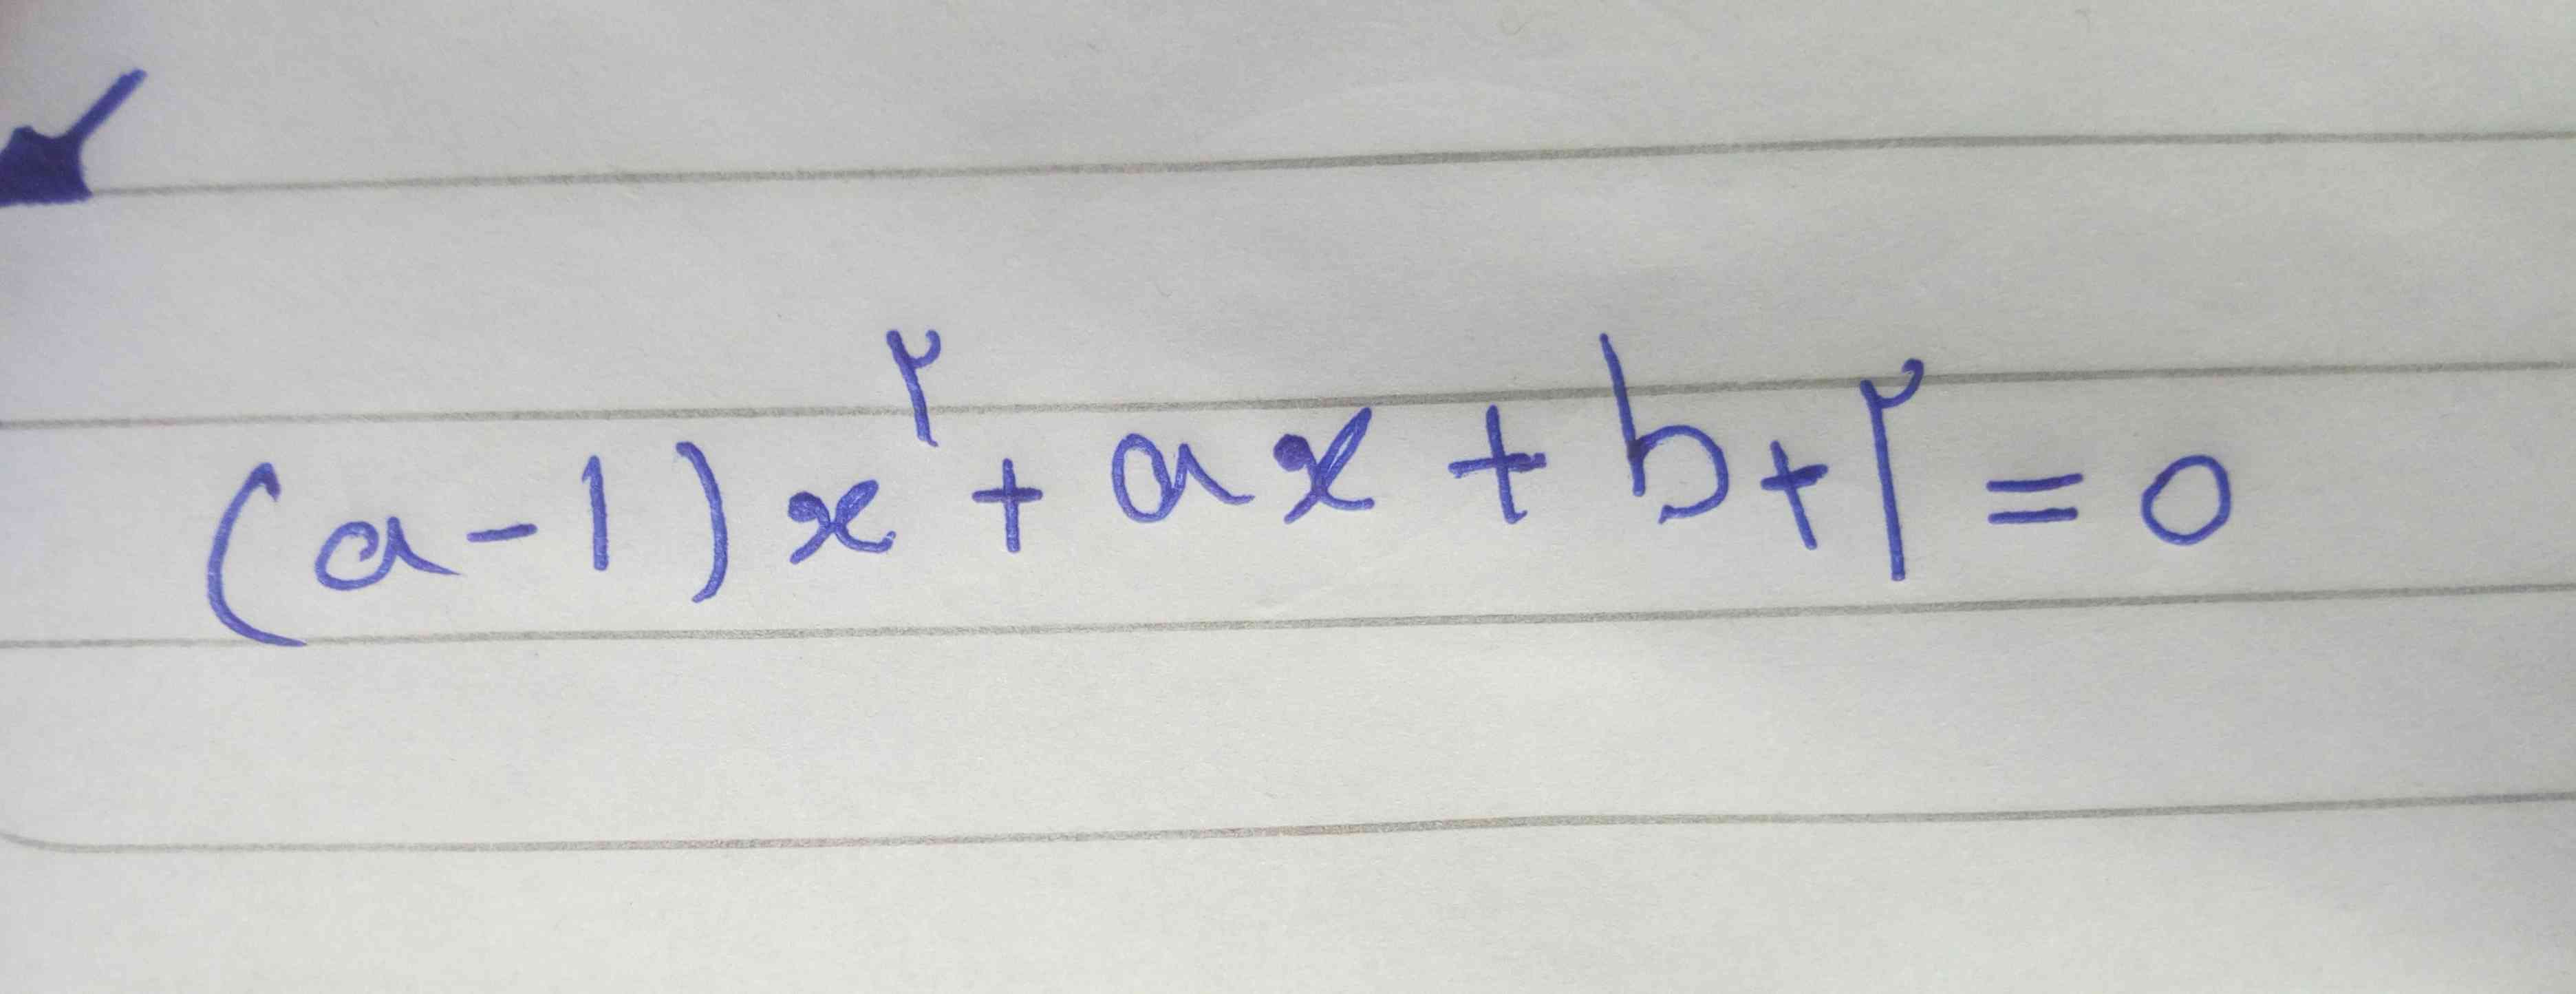 (a_1)x2 + ax + b+2=0 
اگر این معادله دارای ریشه مضاعف ۲ باشد a+b 
چند است ؟ 